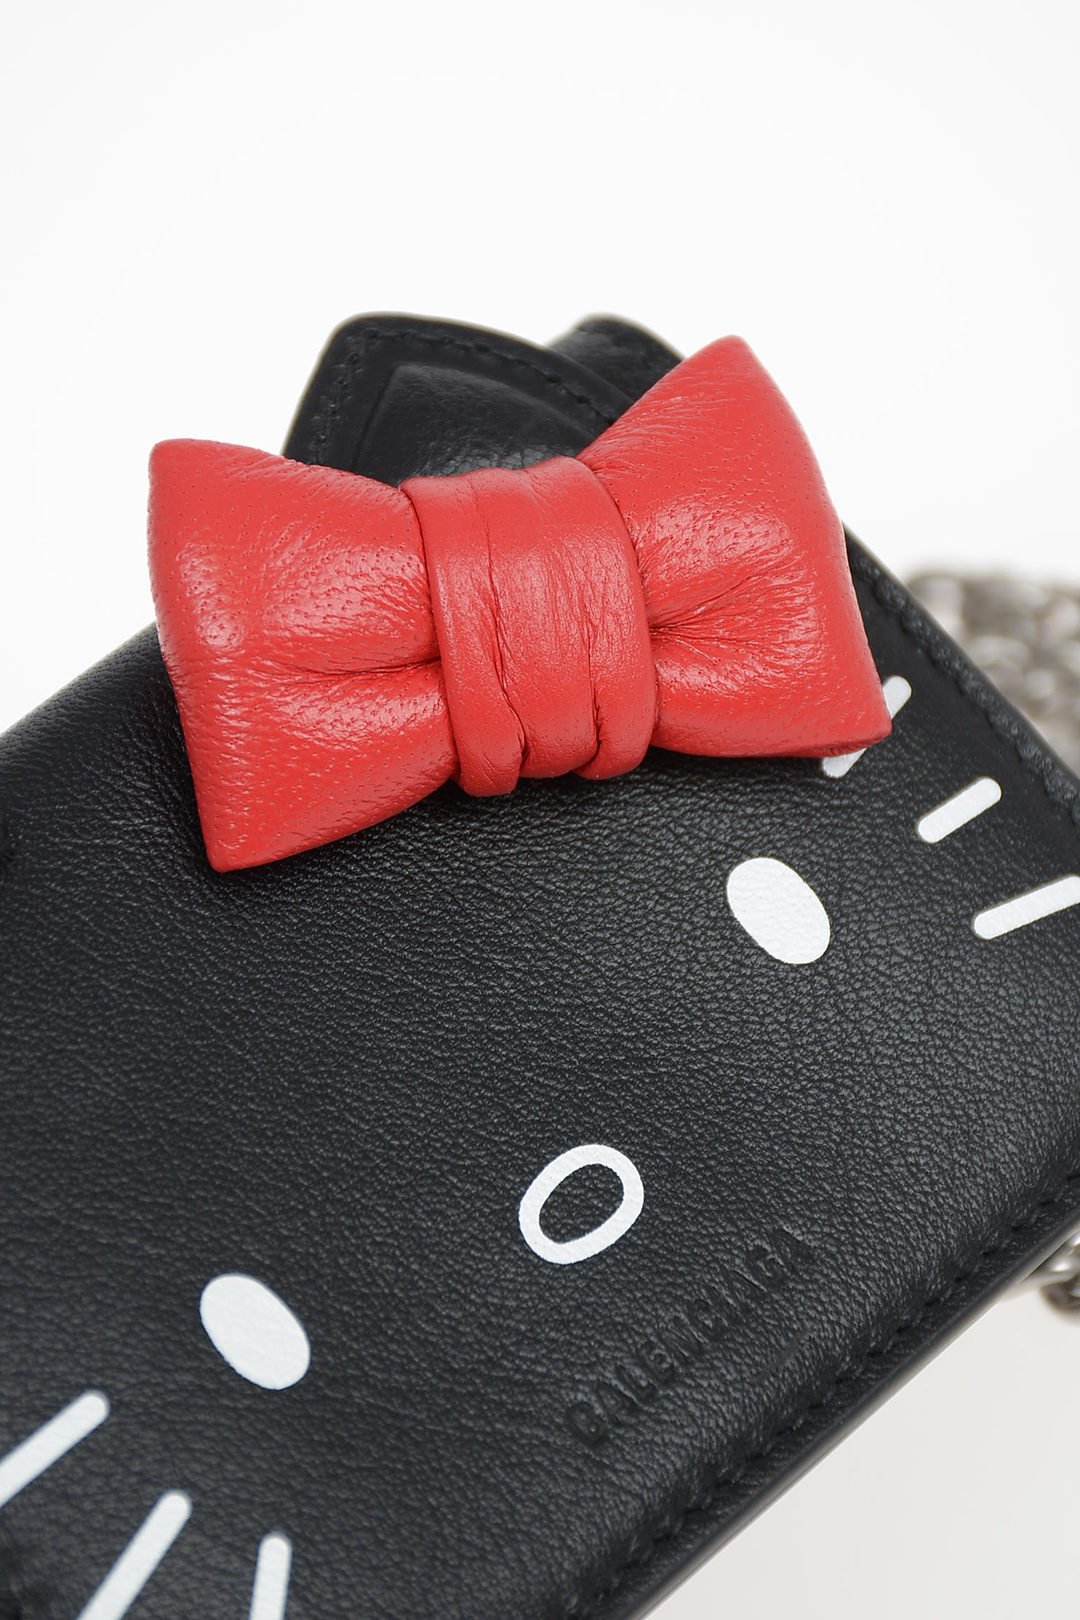 Balenciaga x Hello Kitty Wallet on Chain - Black Mini Bags, Handbags -  BAL117882